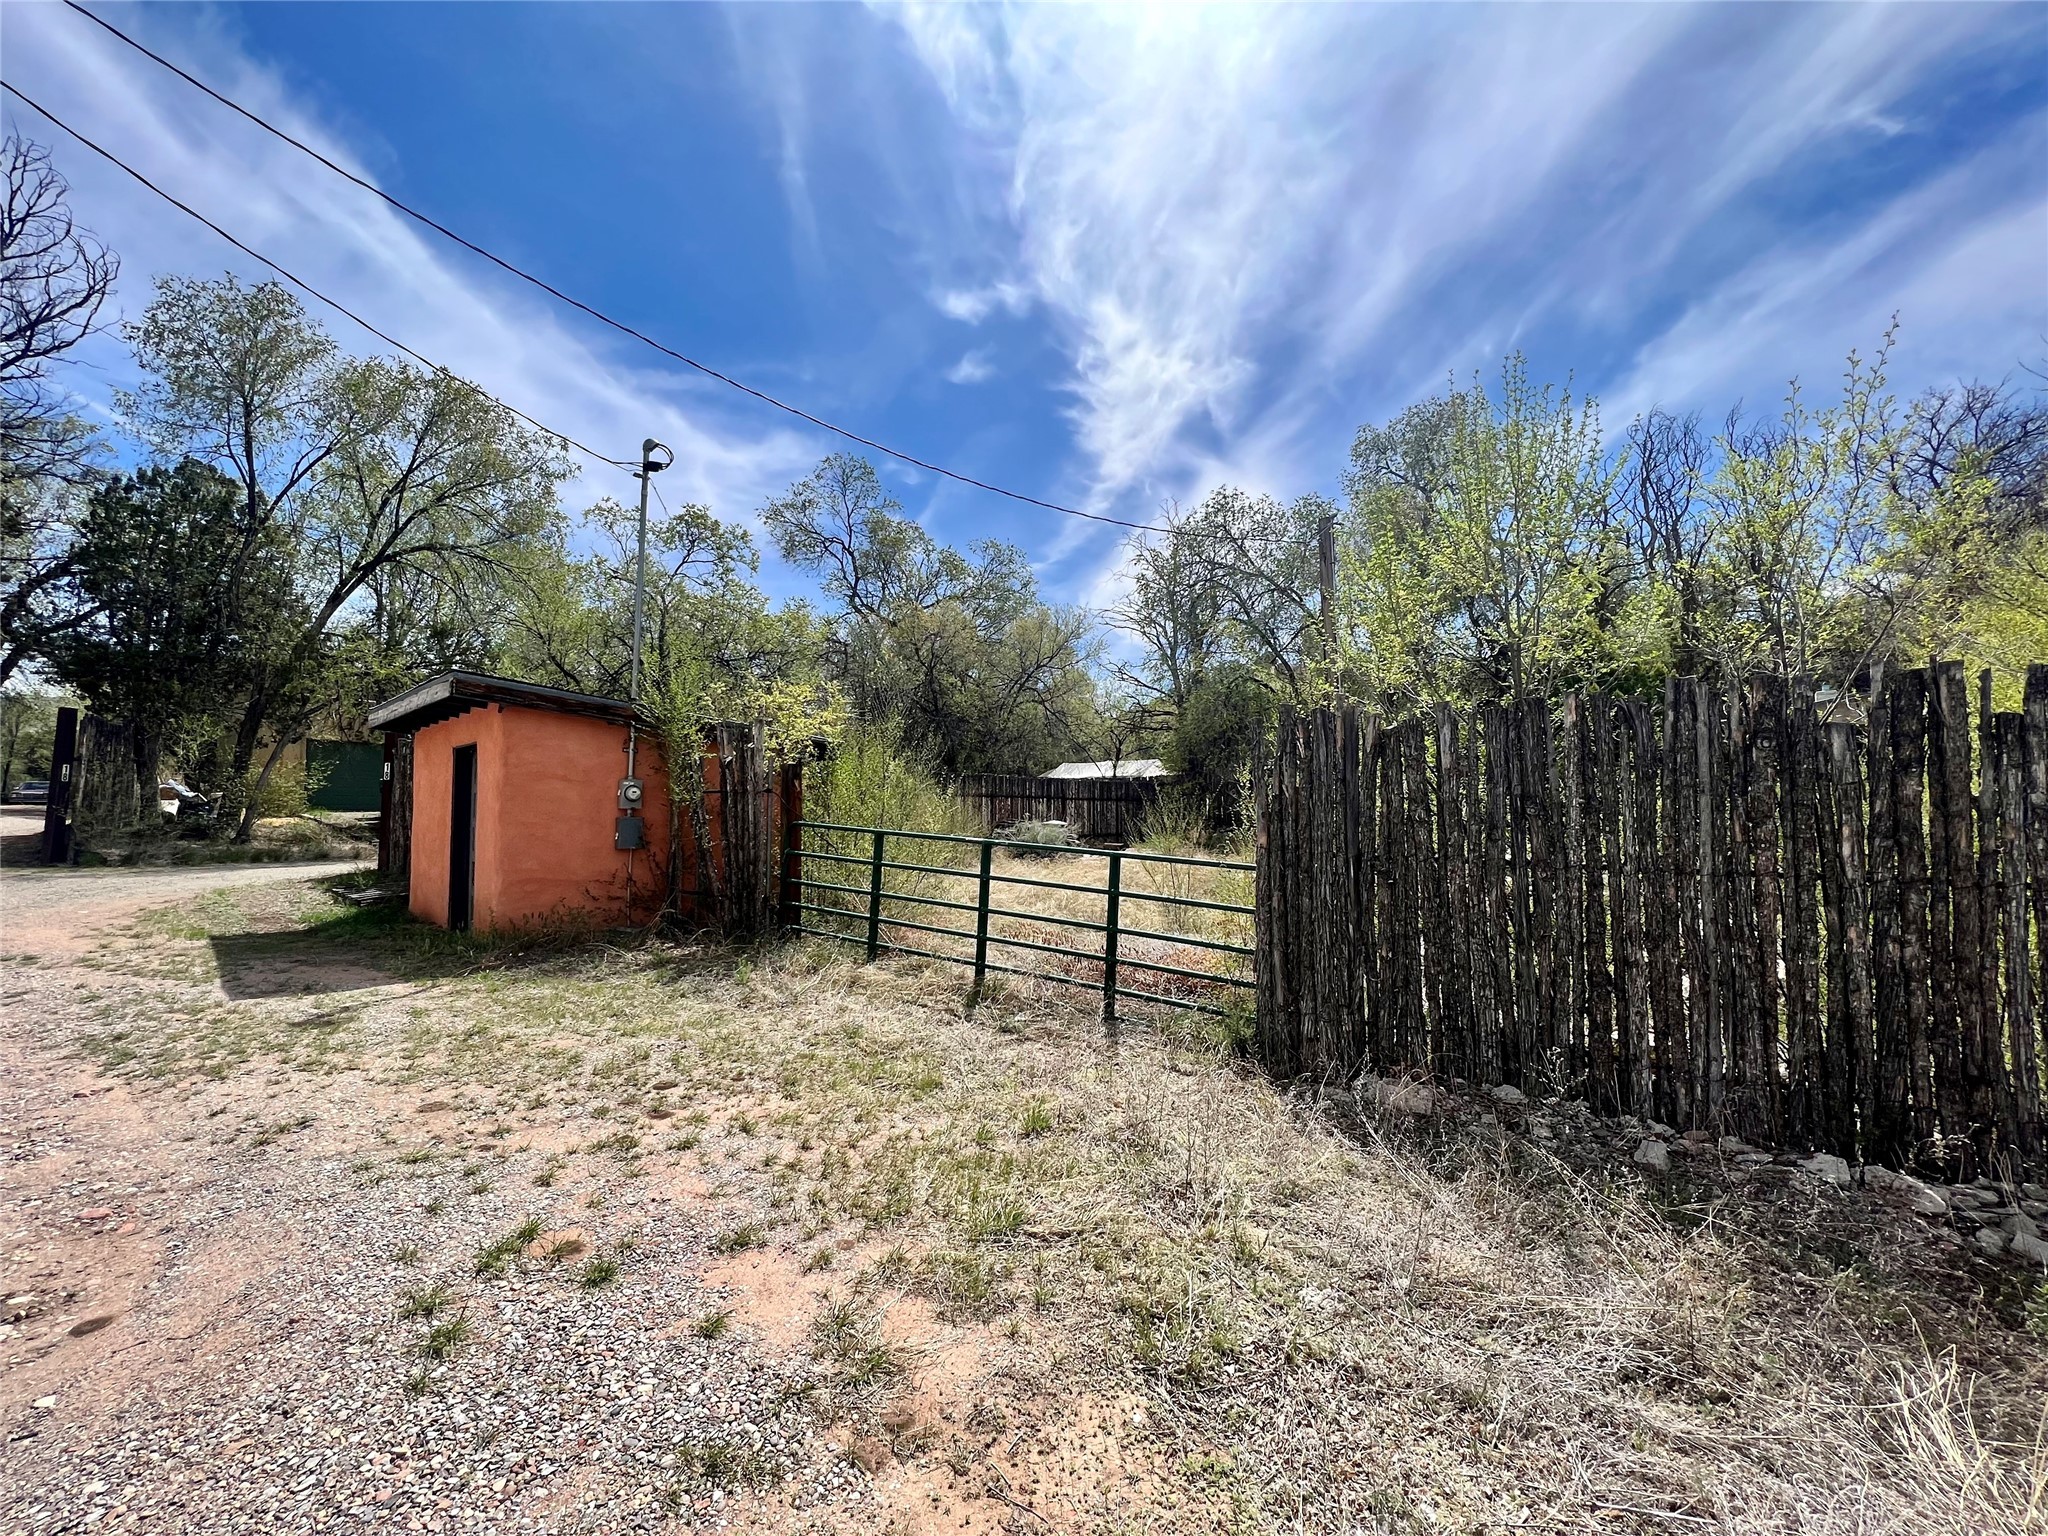 16 Jimenez Romero Road, Santa Fe, New Mexico 87506, ,Land,For Sale,16 Jimenez Romero Road,202338223